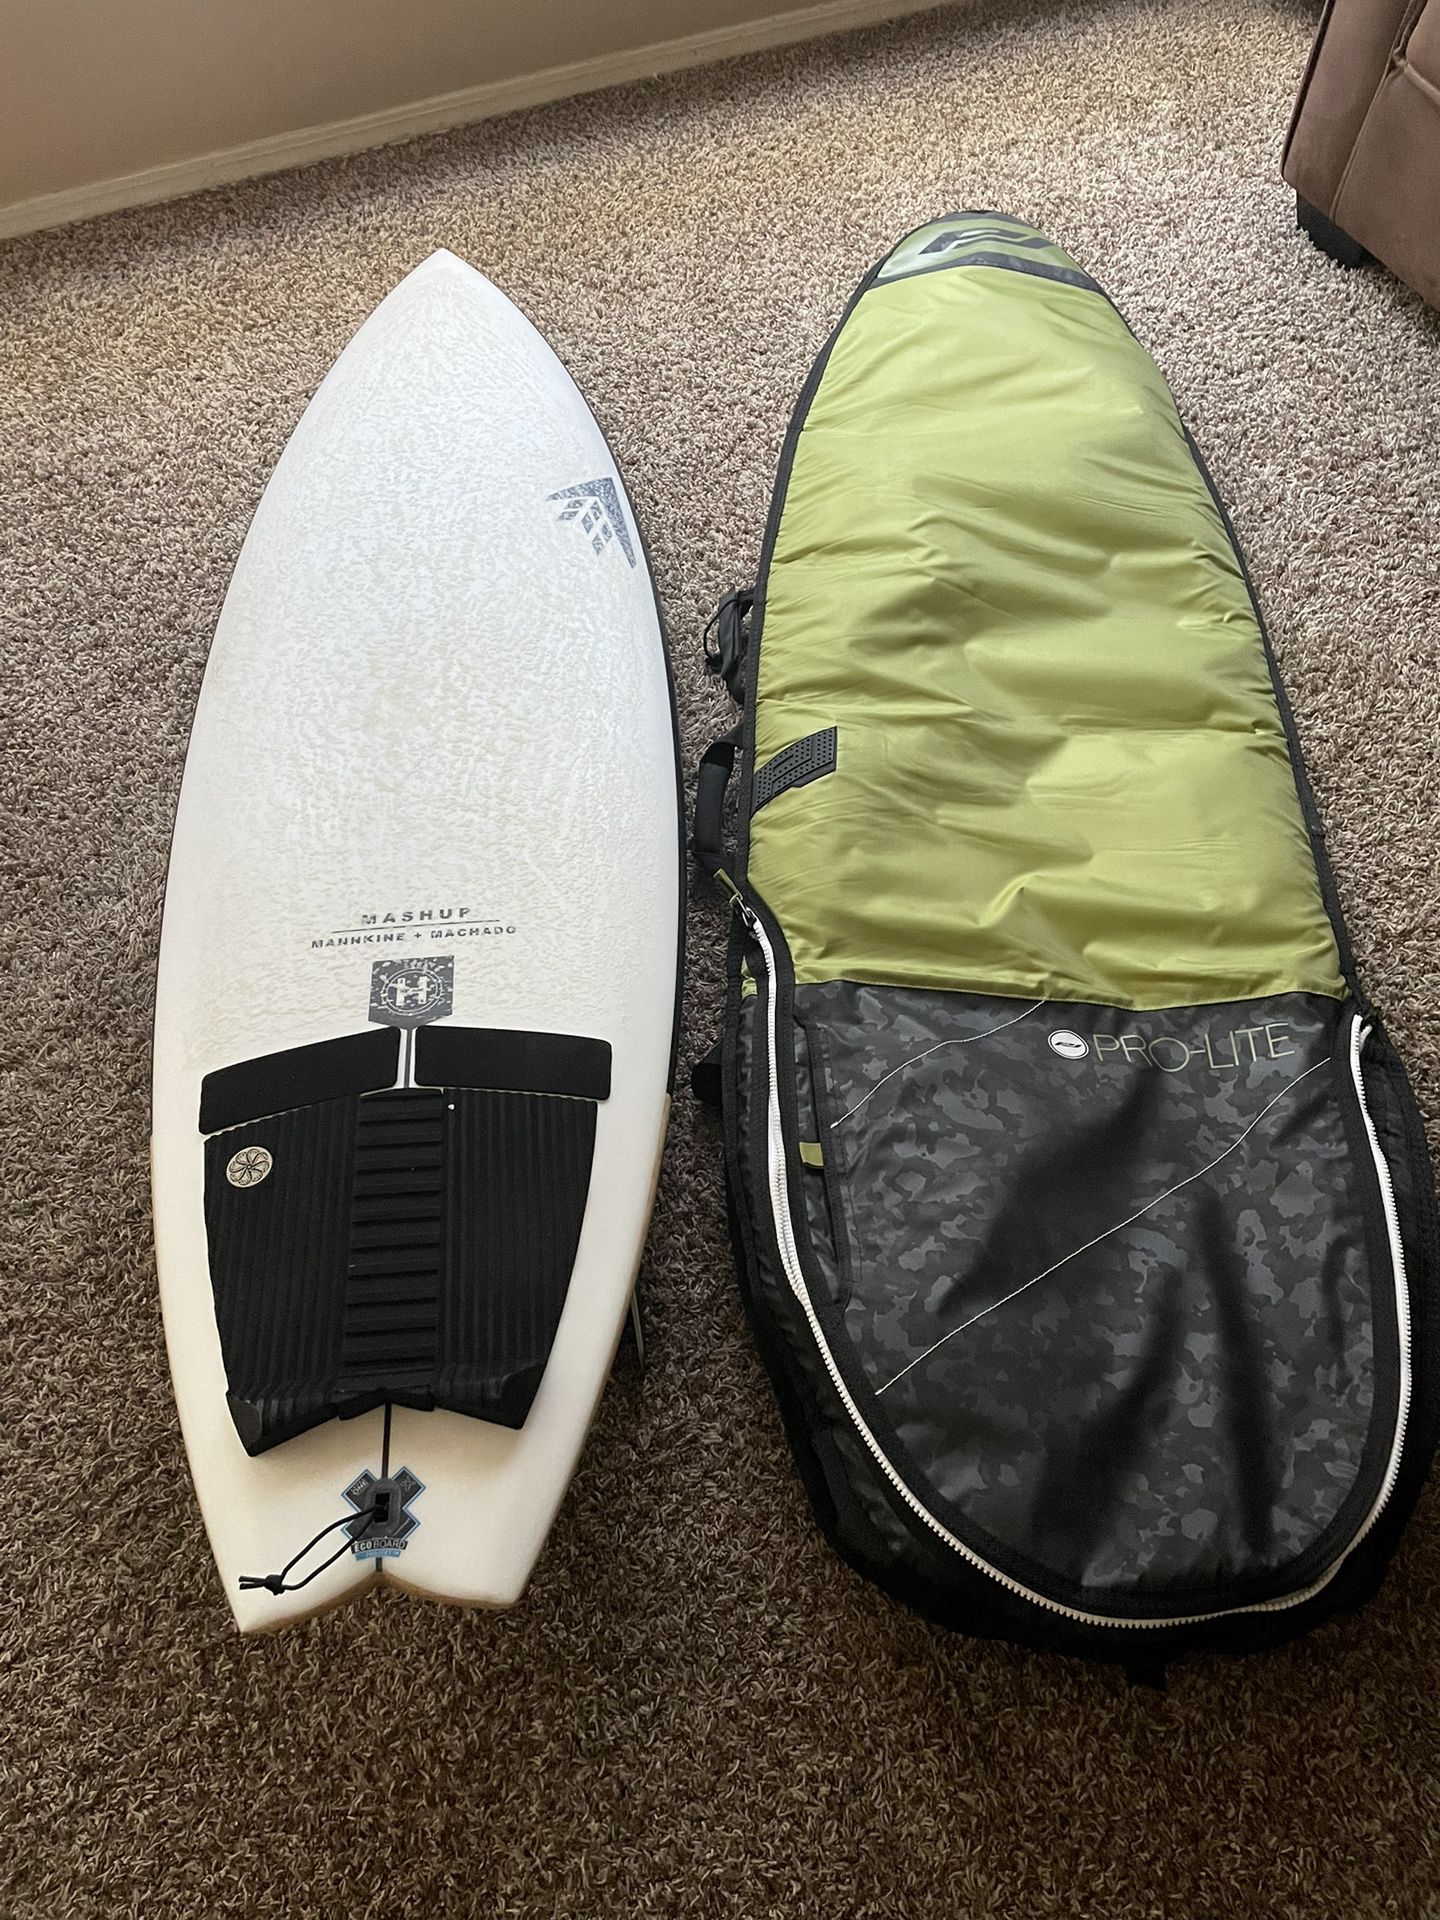 Mashup Mannkine and Machado Surfboard